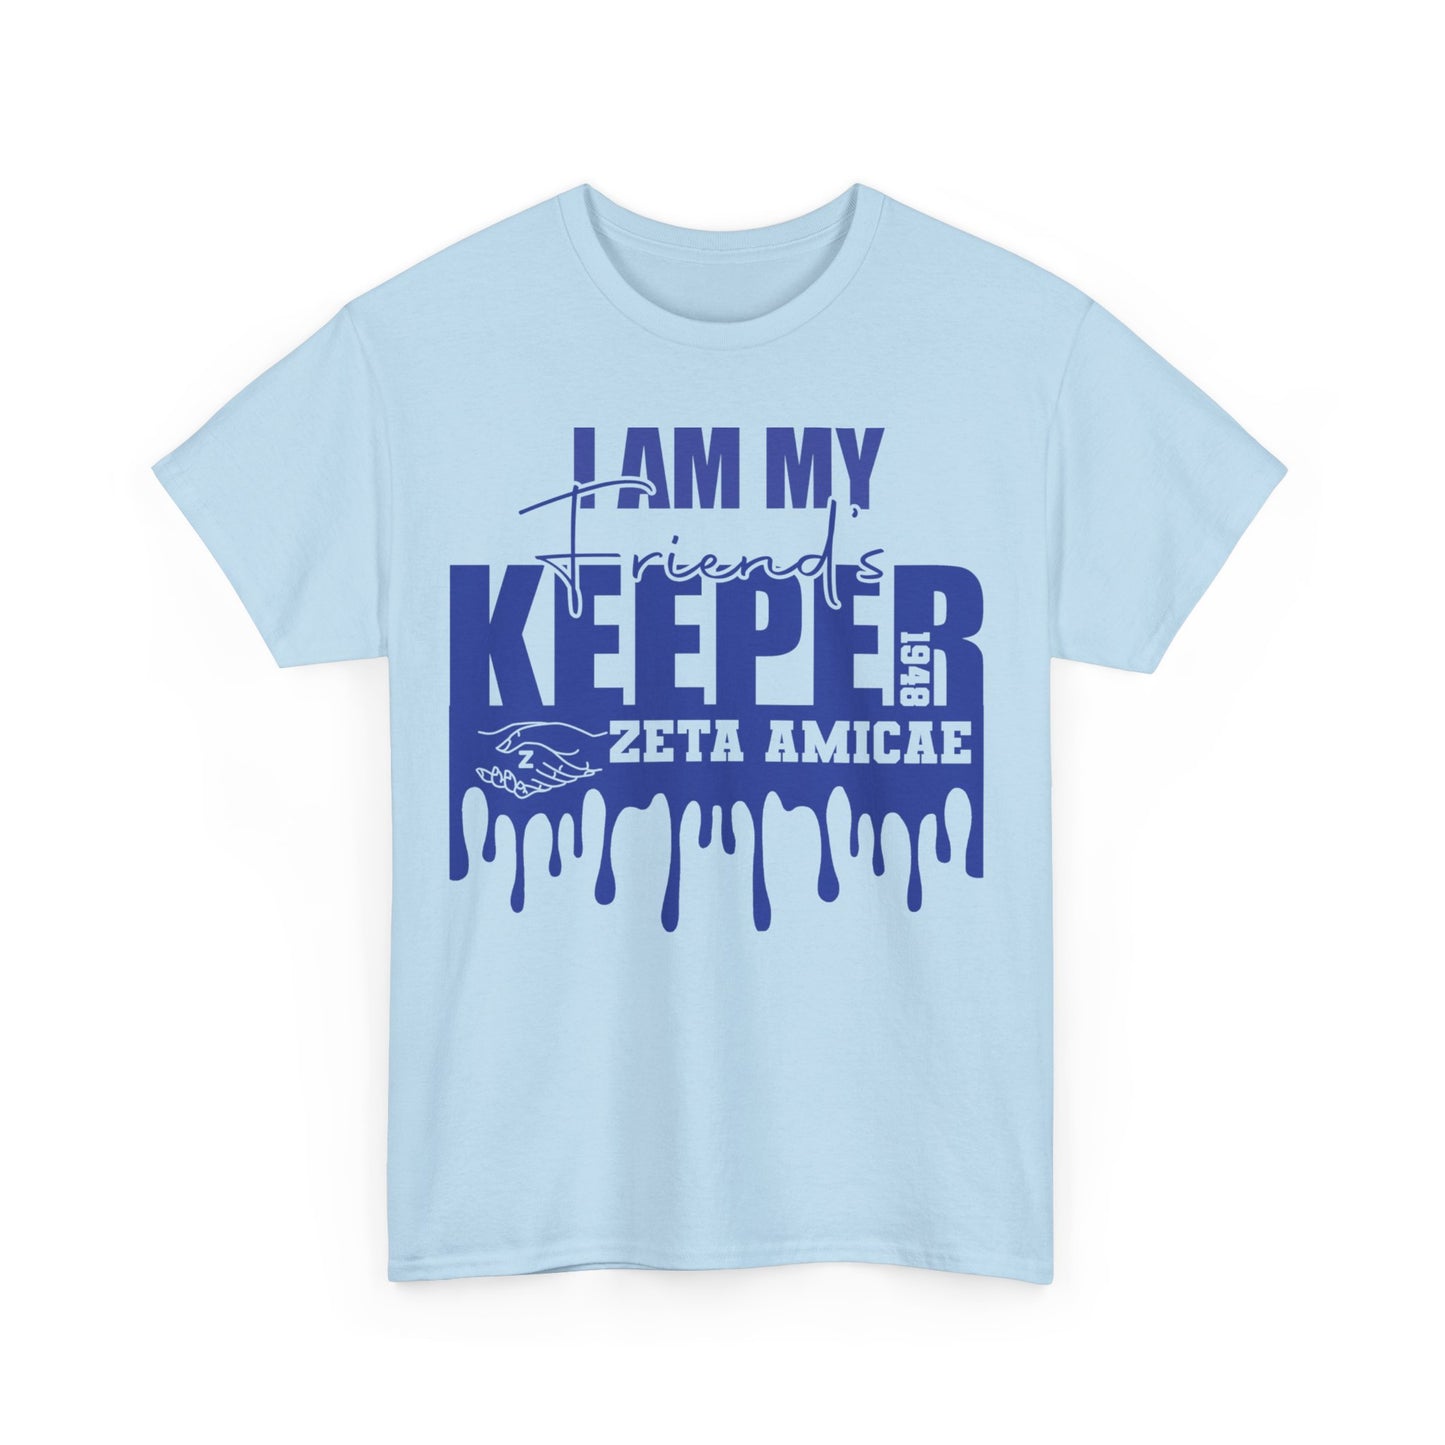 Zeta Amicae "Friends's Keeper" T-Shirt